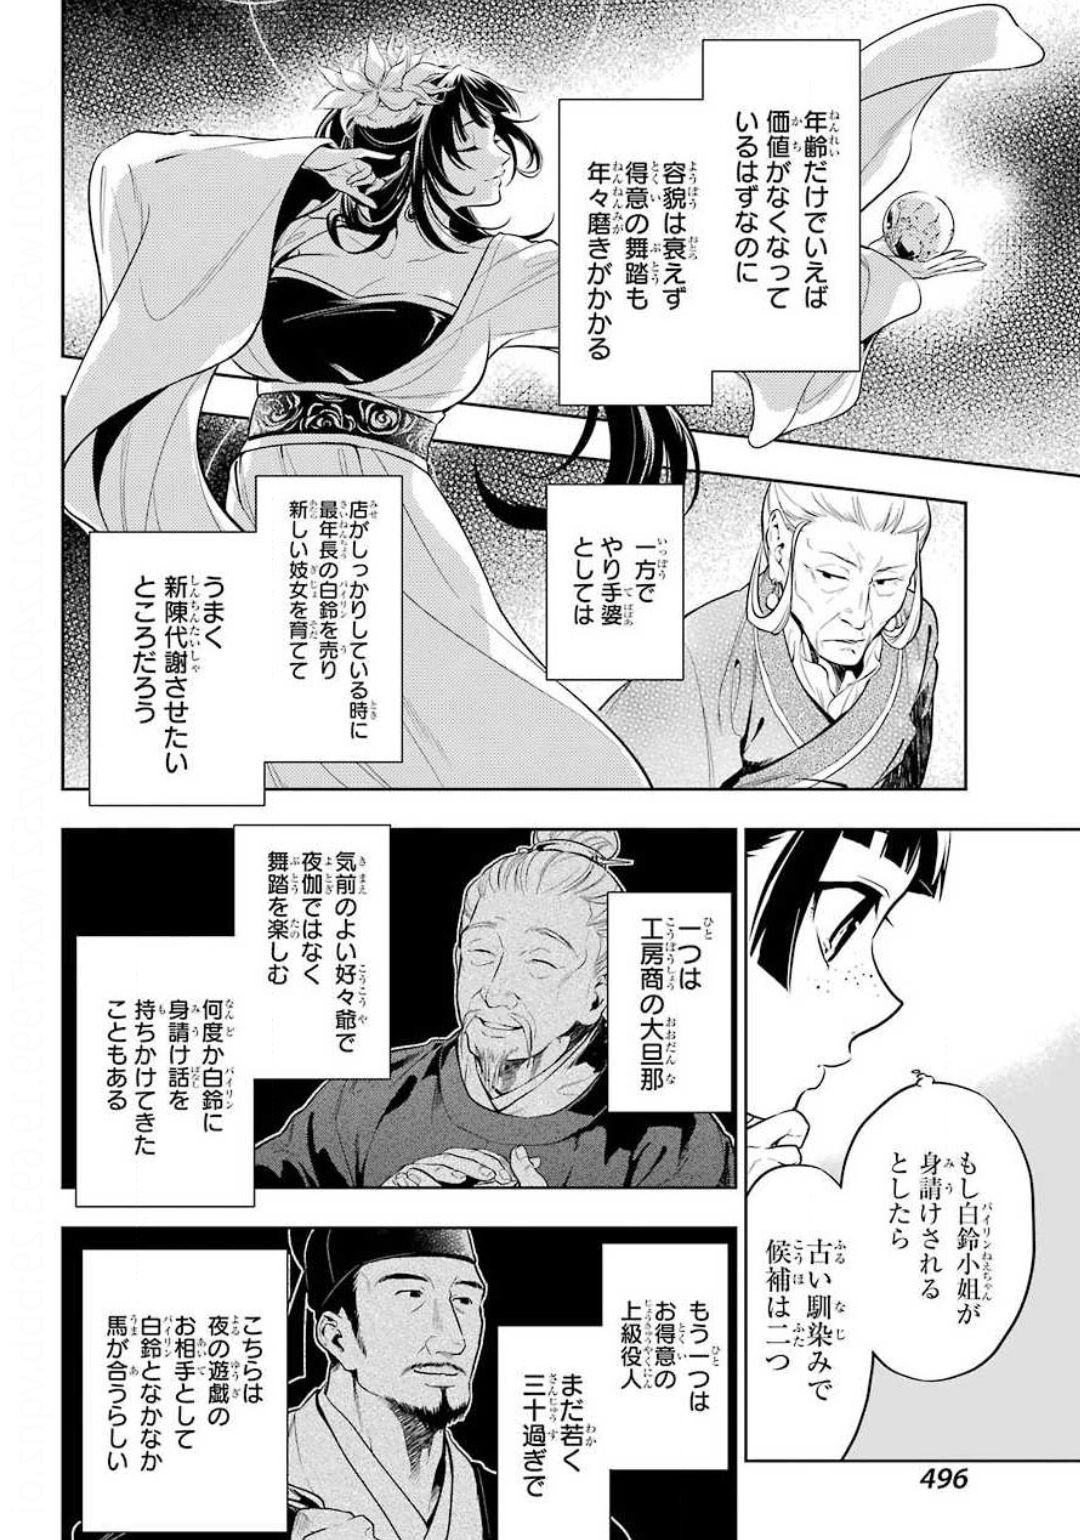 Kusuriya no Hitorigoto - Chapter 35-2 - Page 4